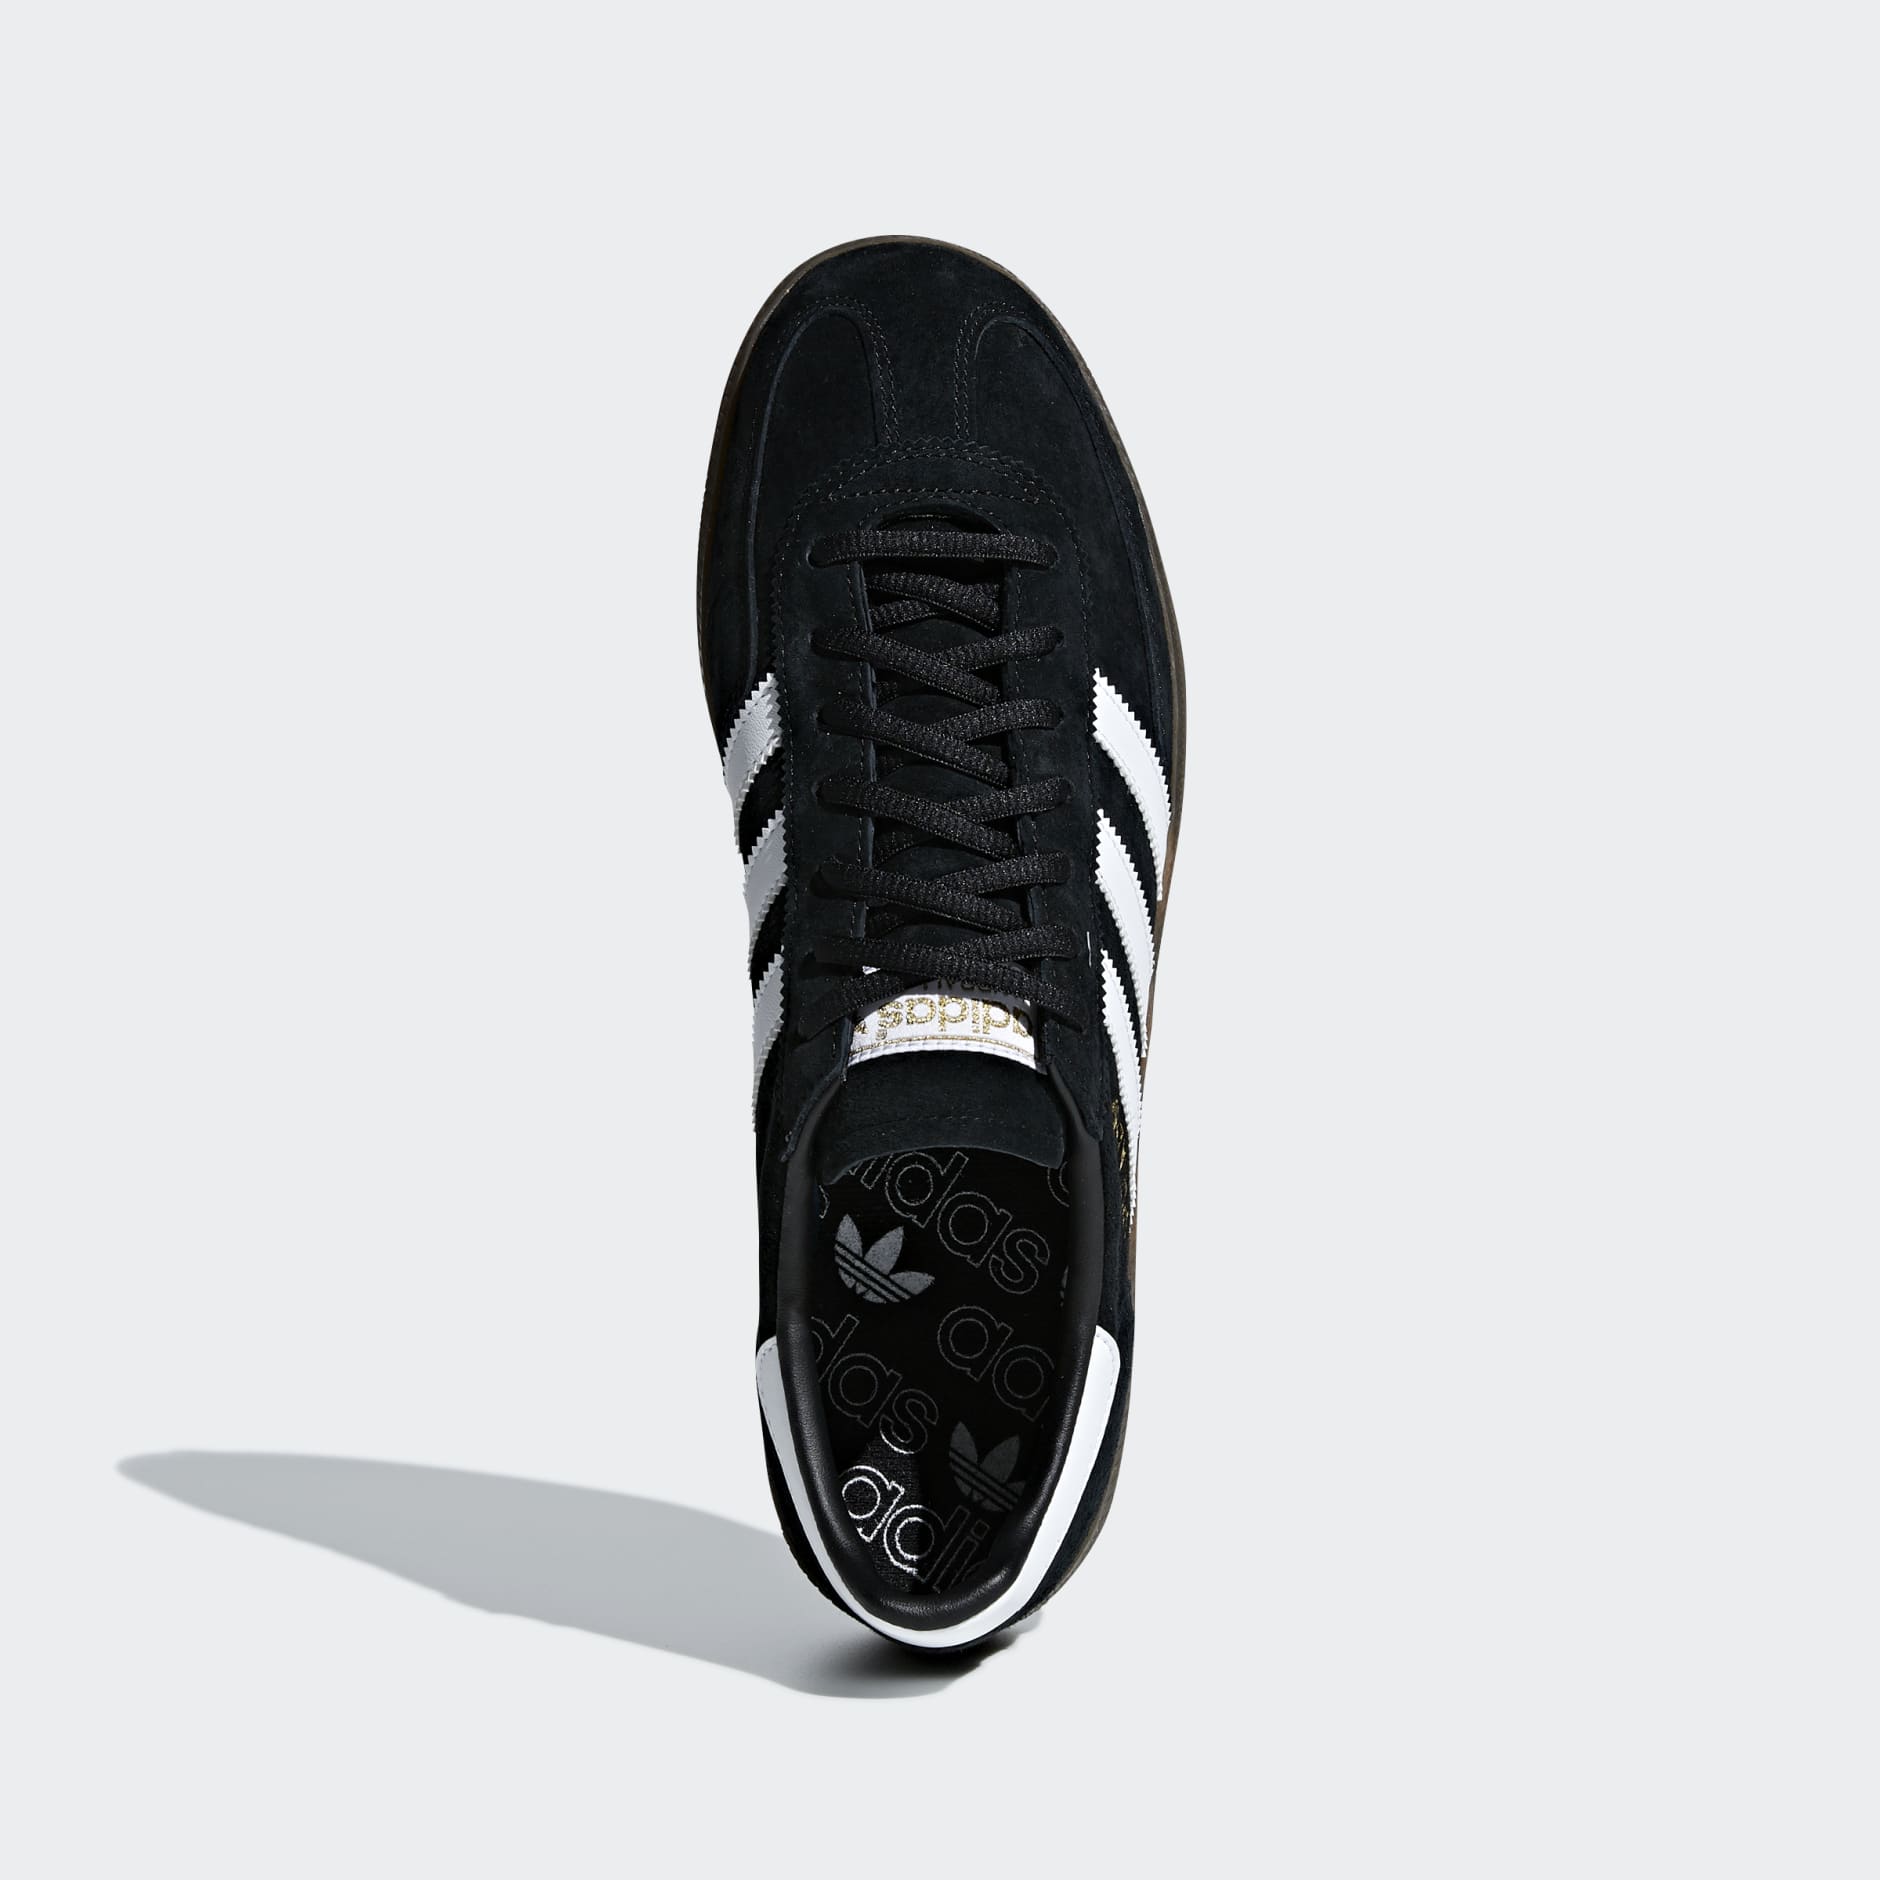 Men's Shoes - Handball Spezial Shoes - Black | adidas Oman